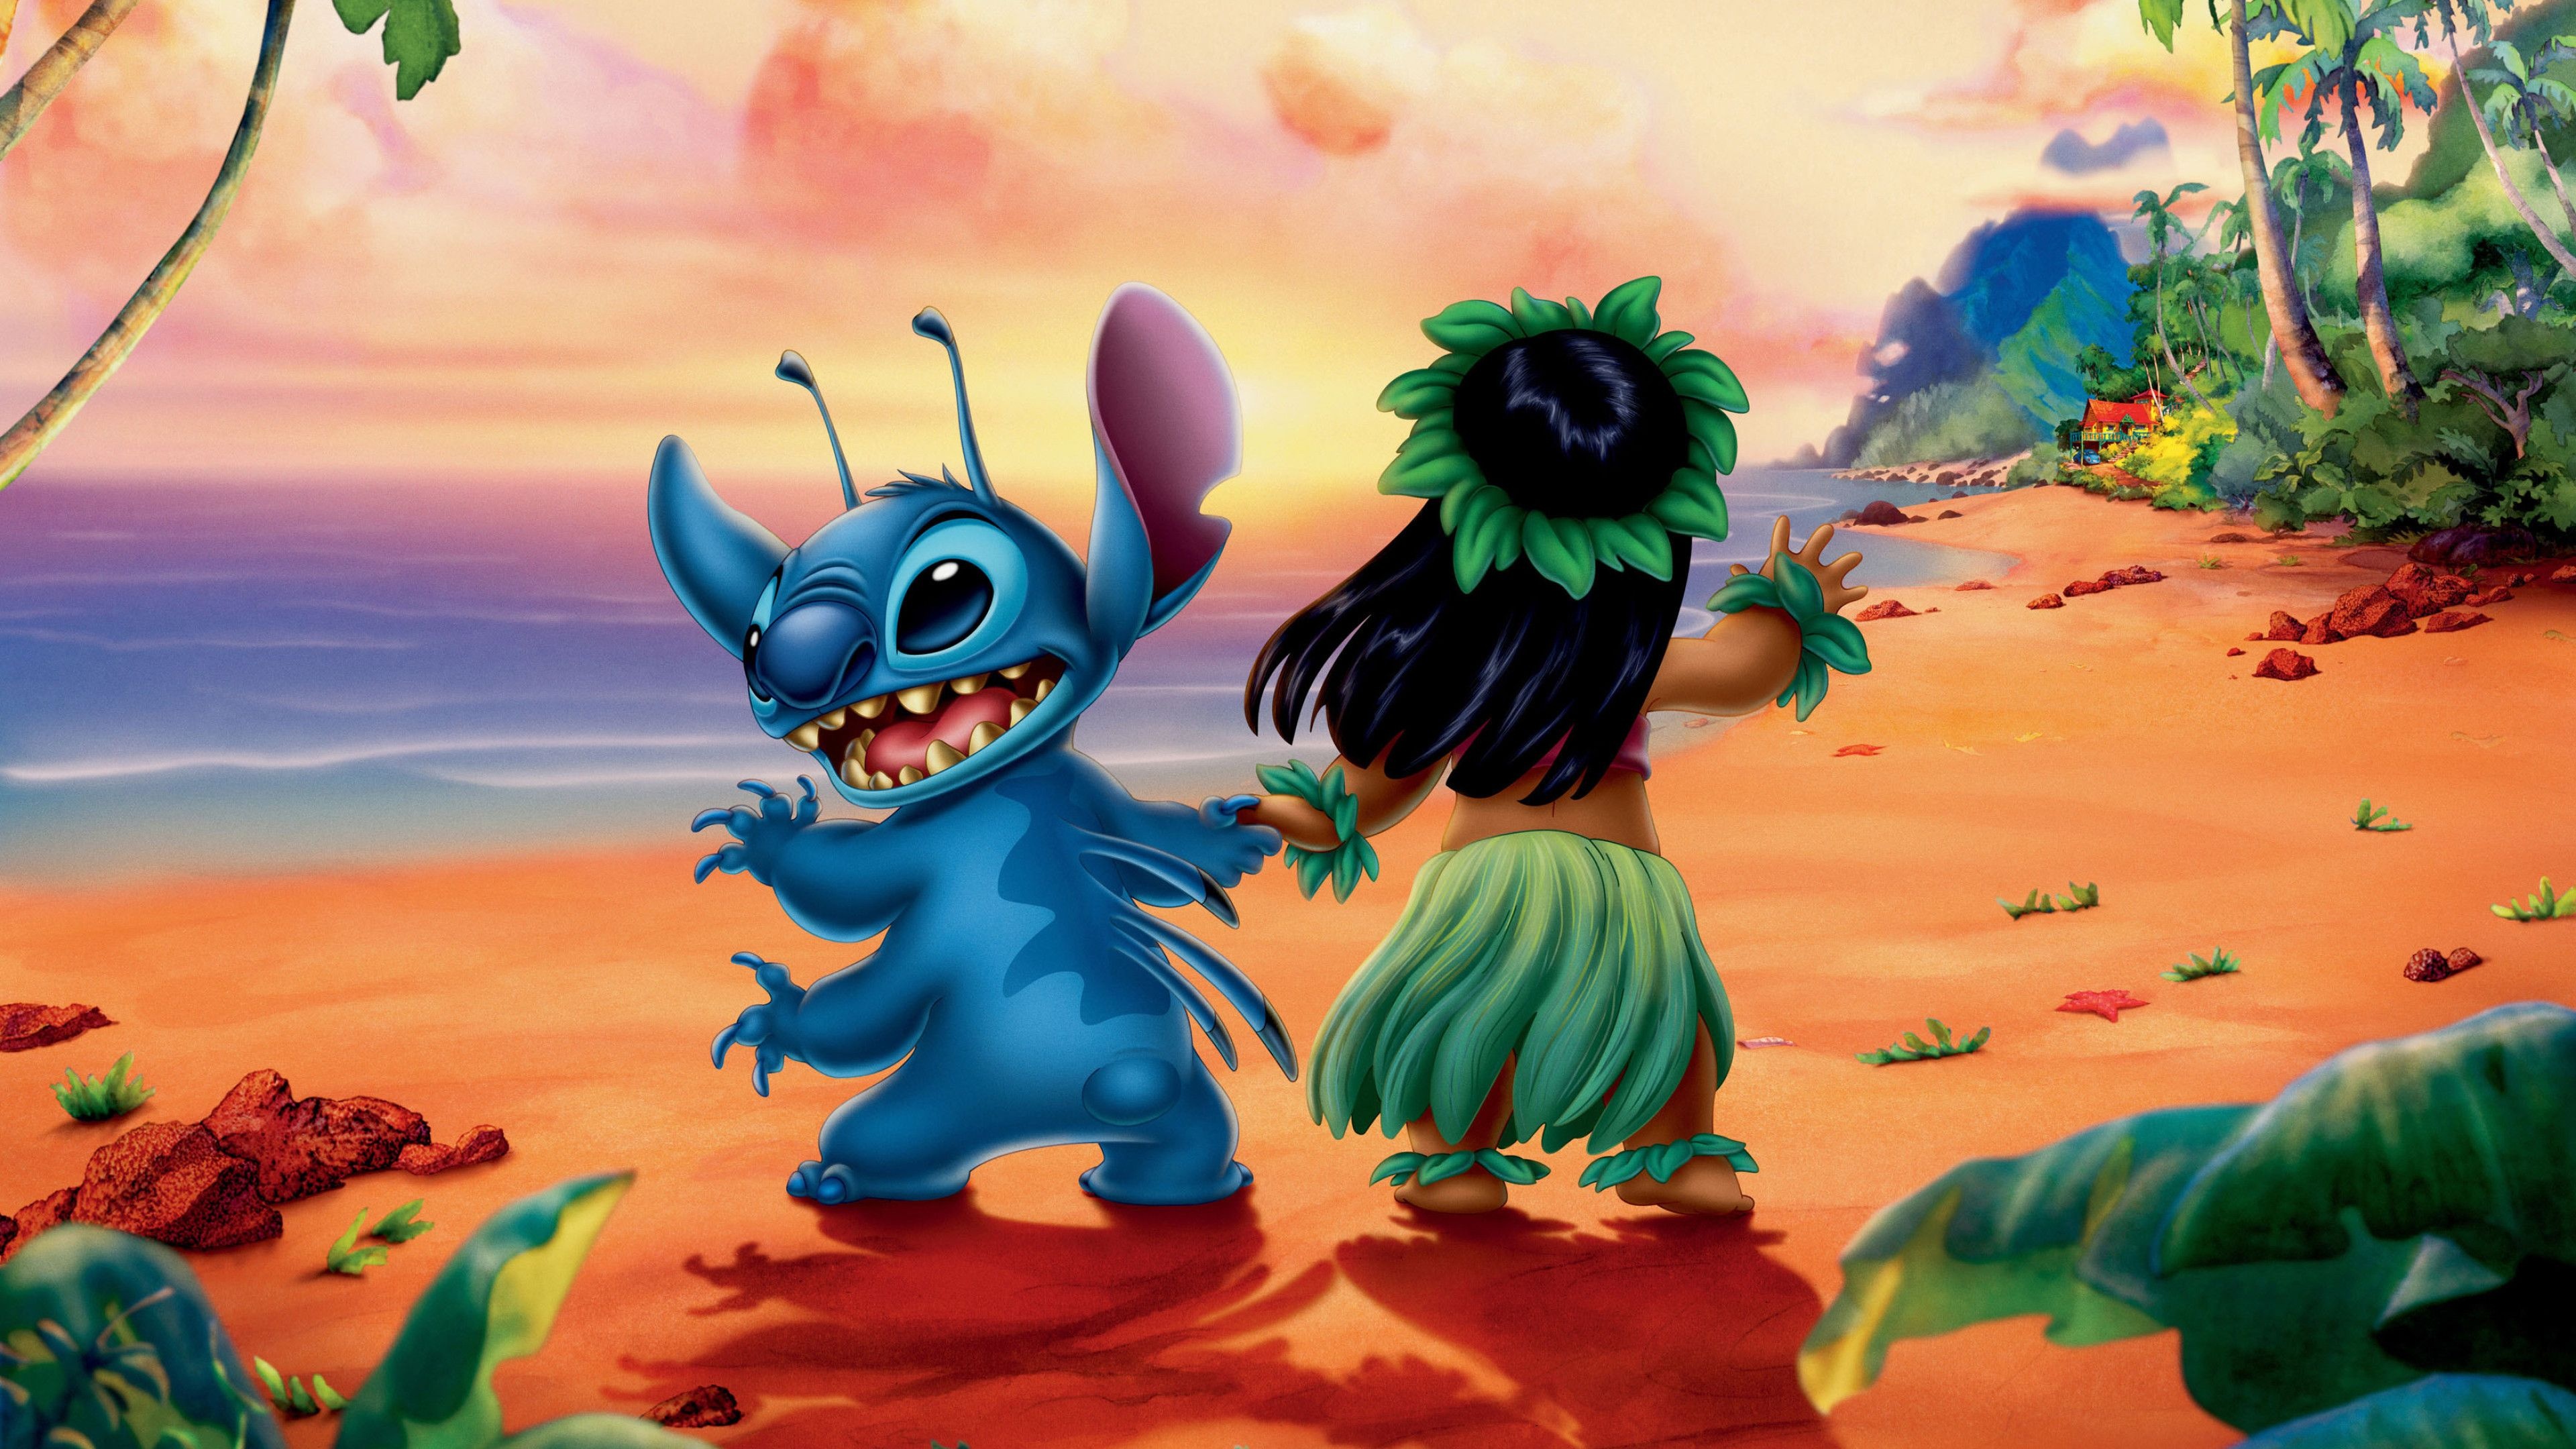 Stitch animation, Cute alien companion, Disney movie, Adorable blue creature, 3840x2160 4K Desktop